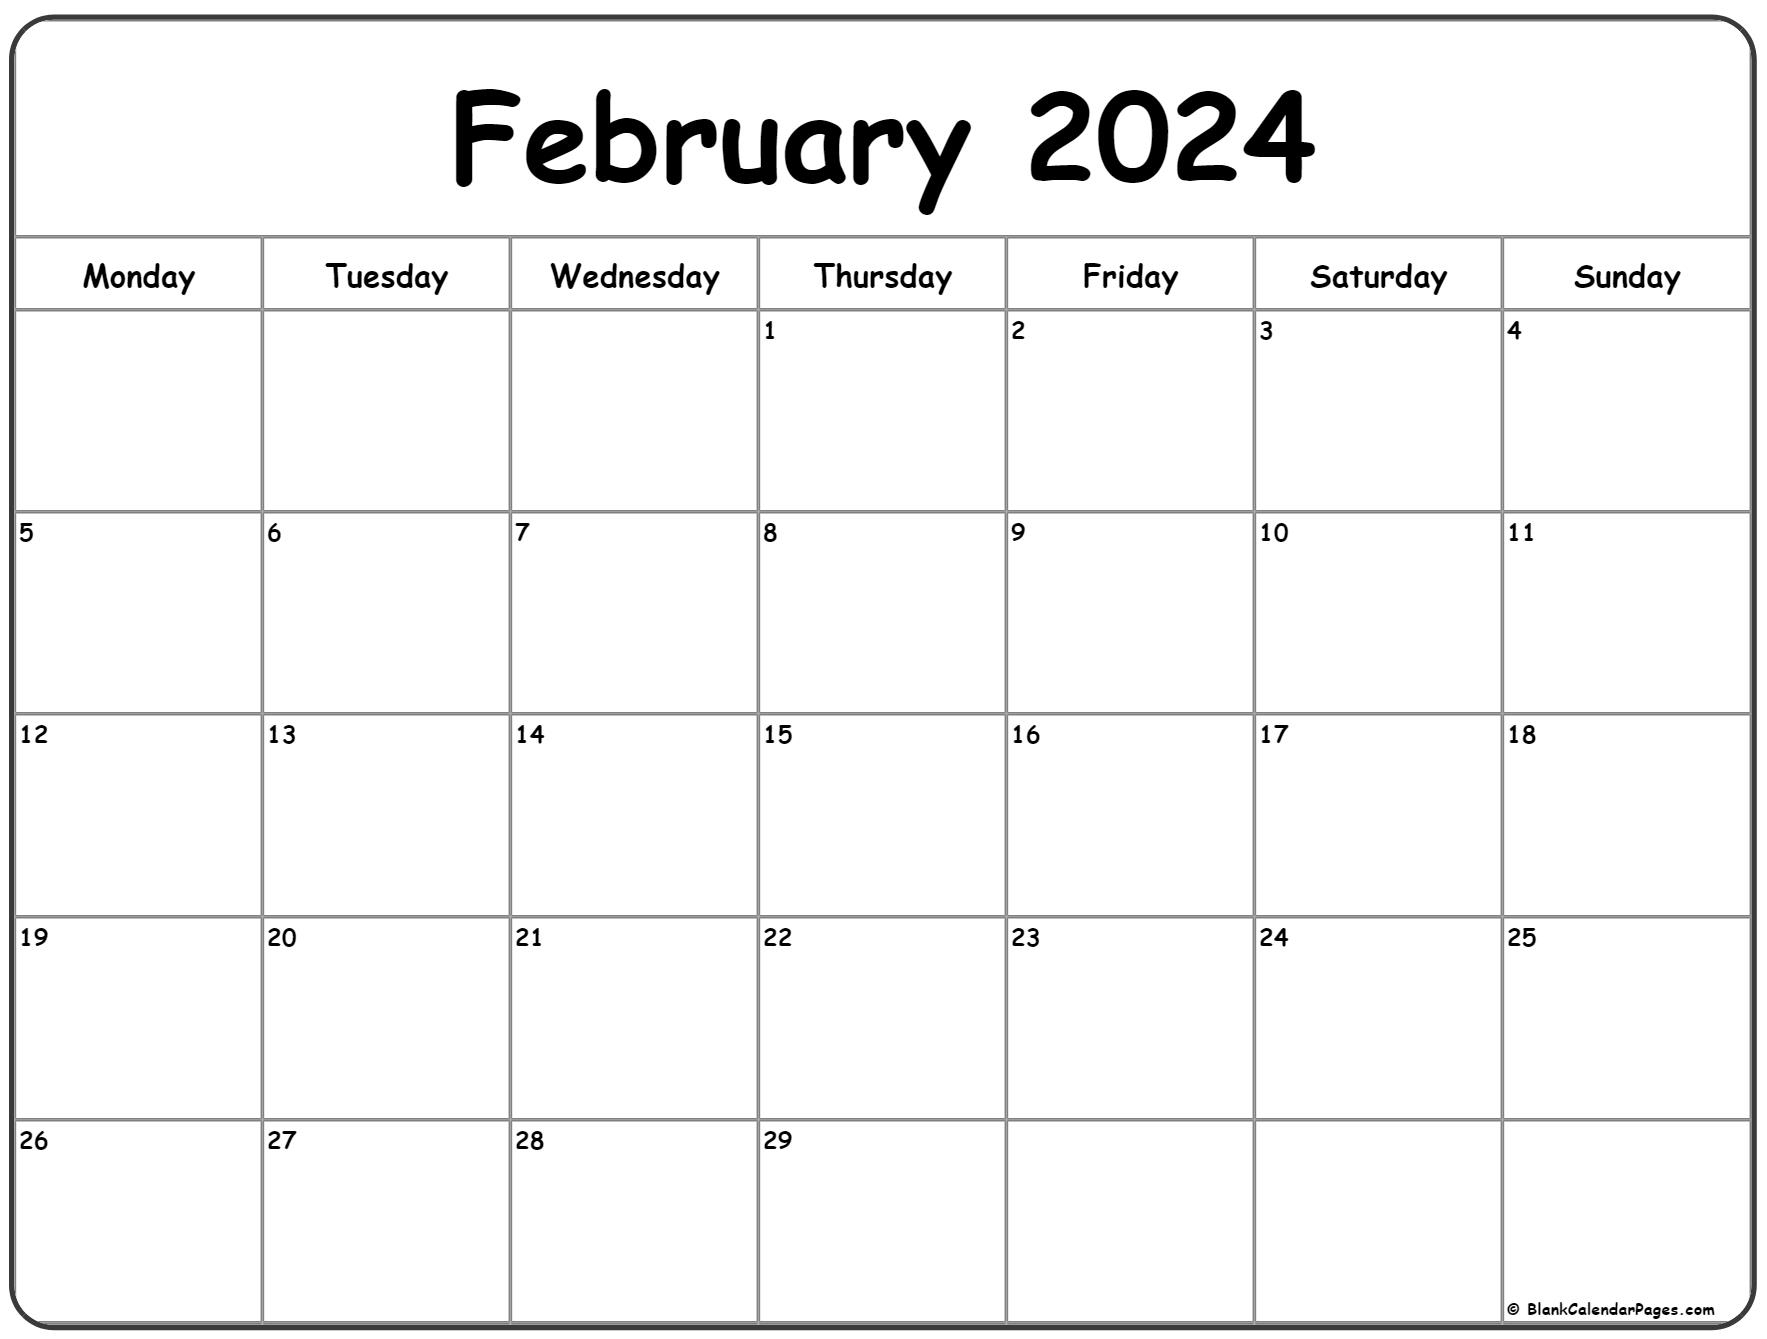 February 2024 Monday Calendar | Monday To Sunday for Blank Calendar February 2024 Printable